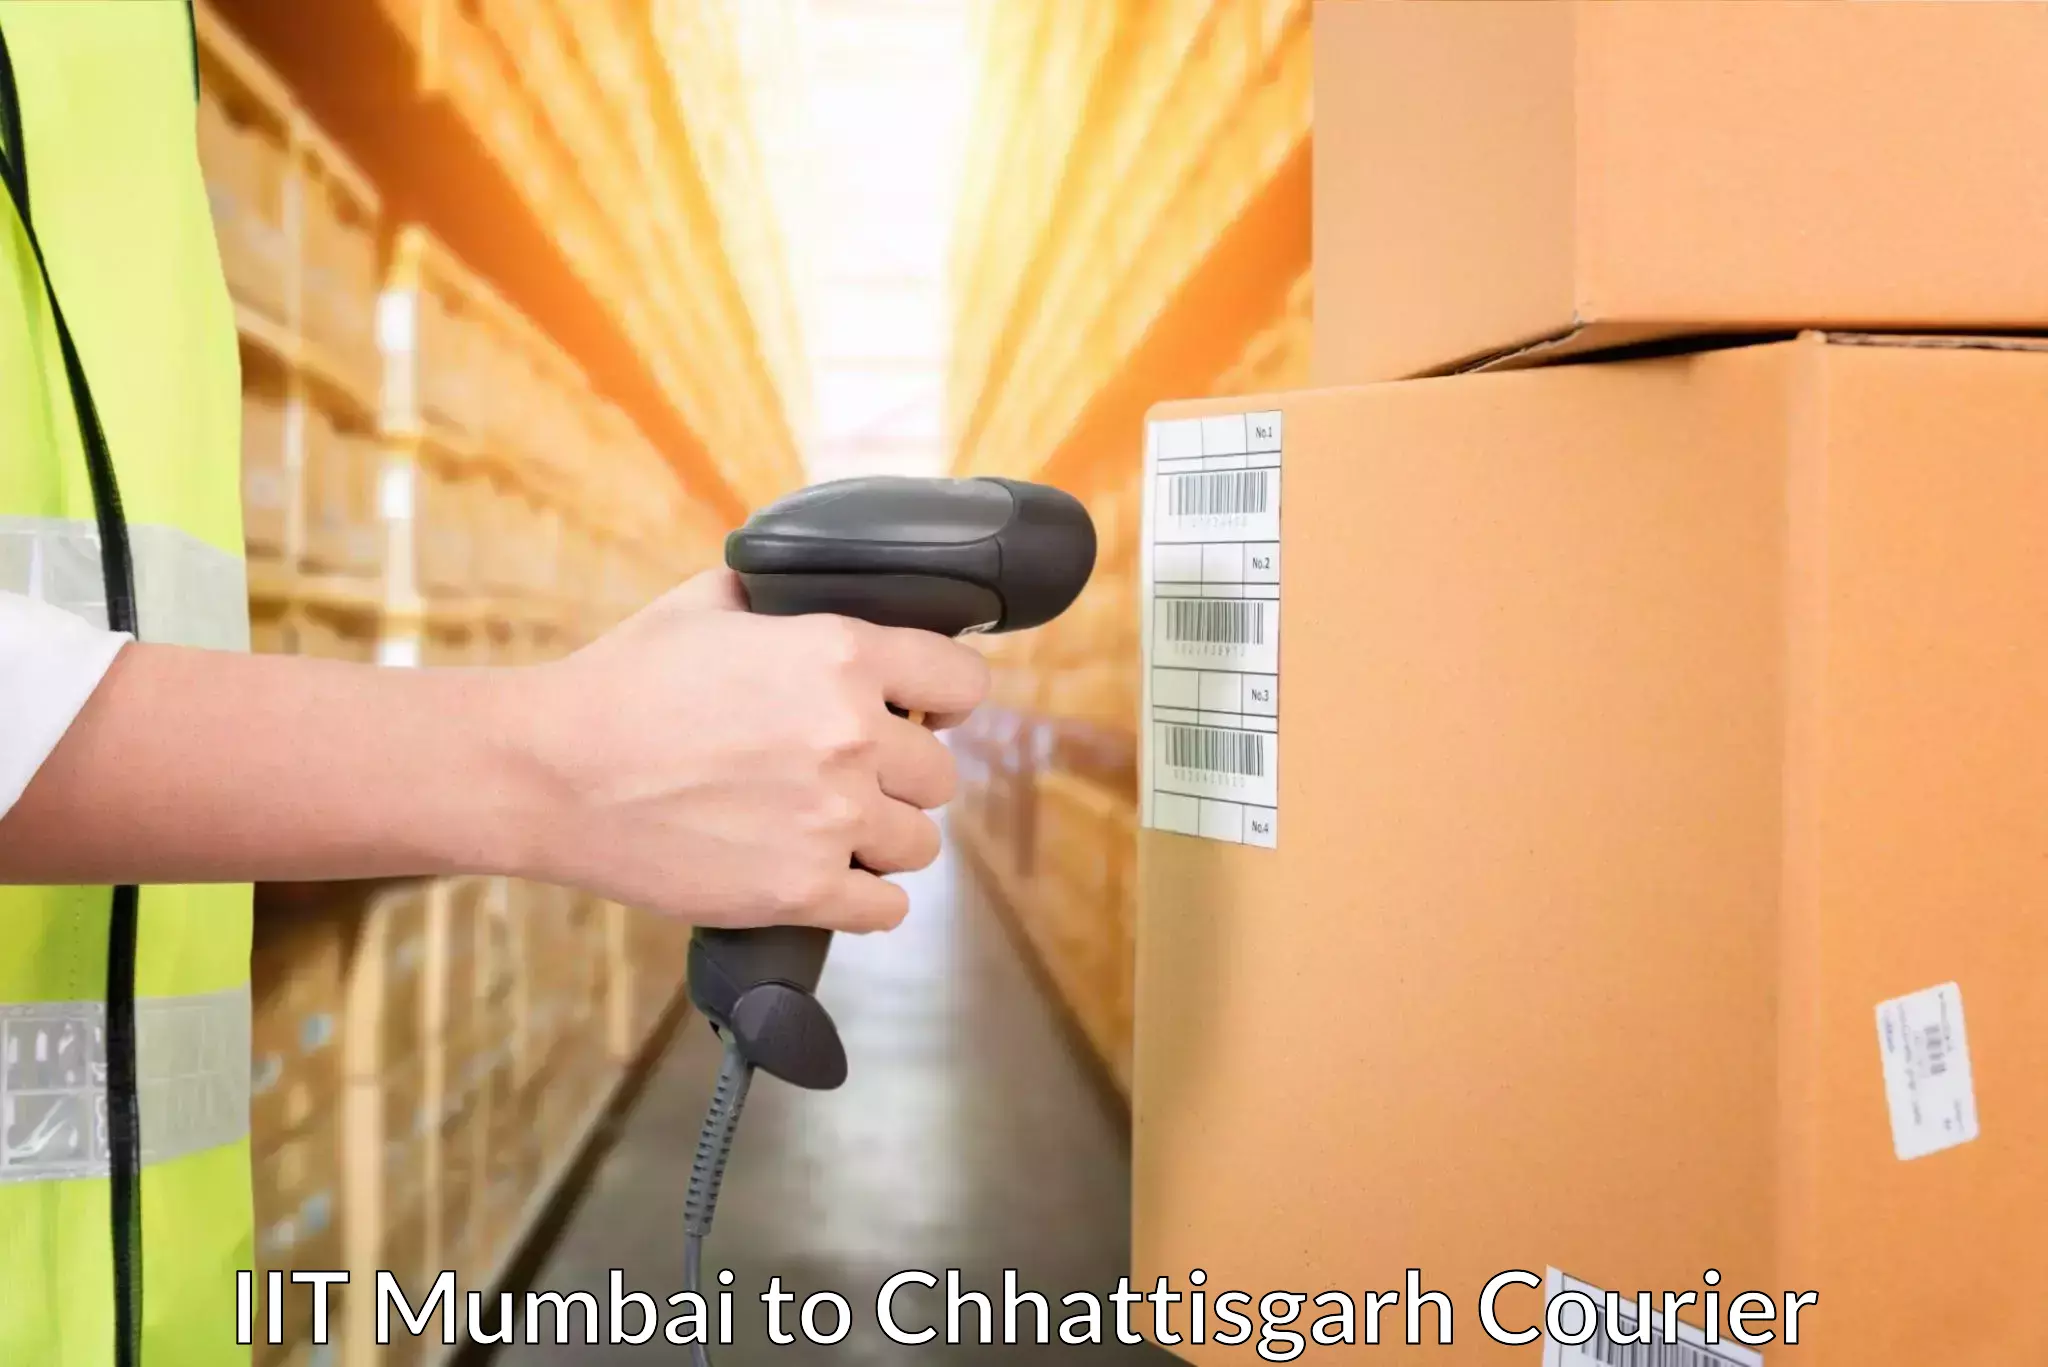 Courier service comparison IIT Mumbai to Tilda